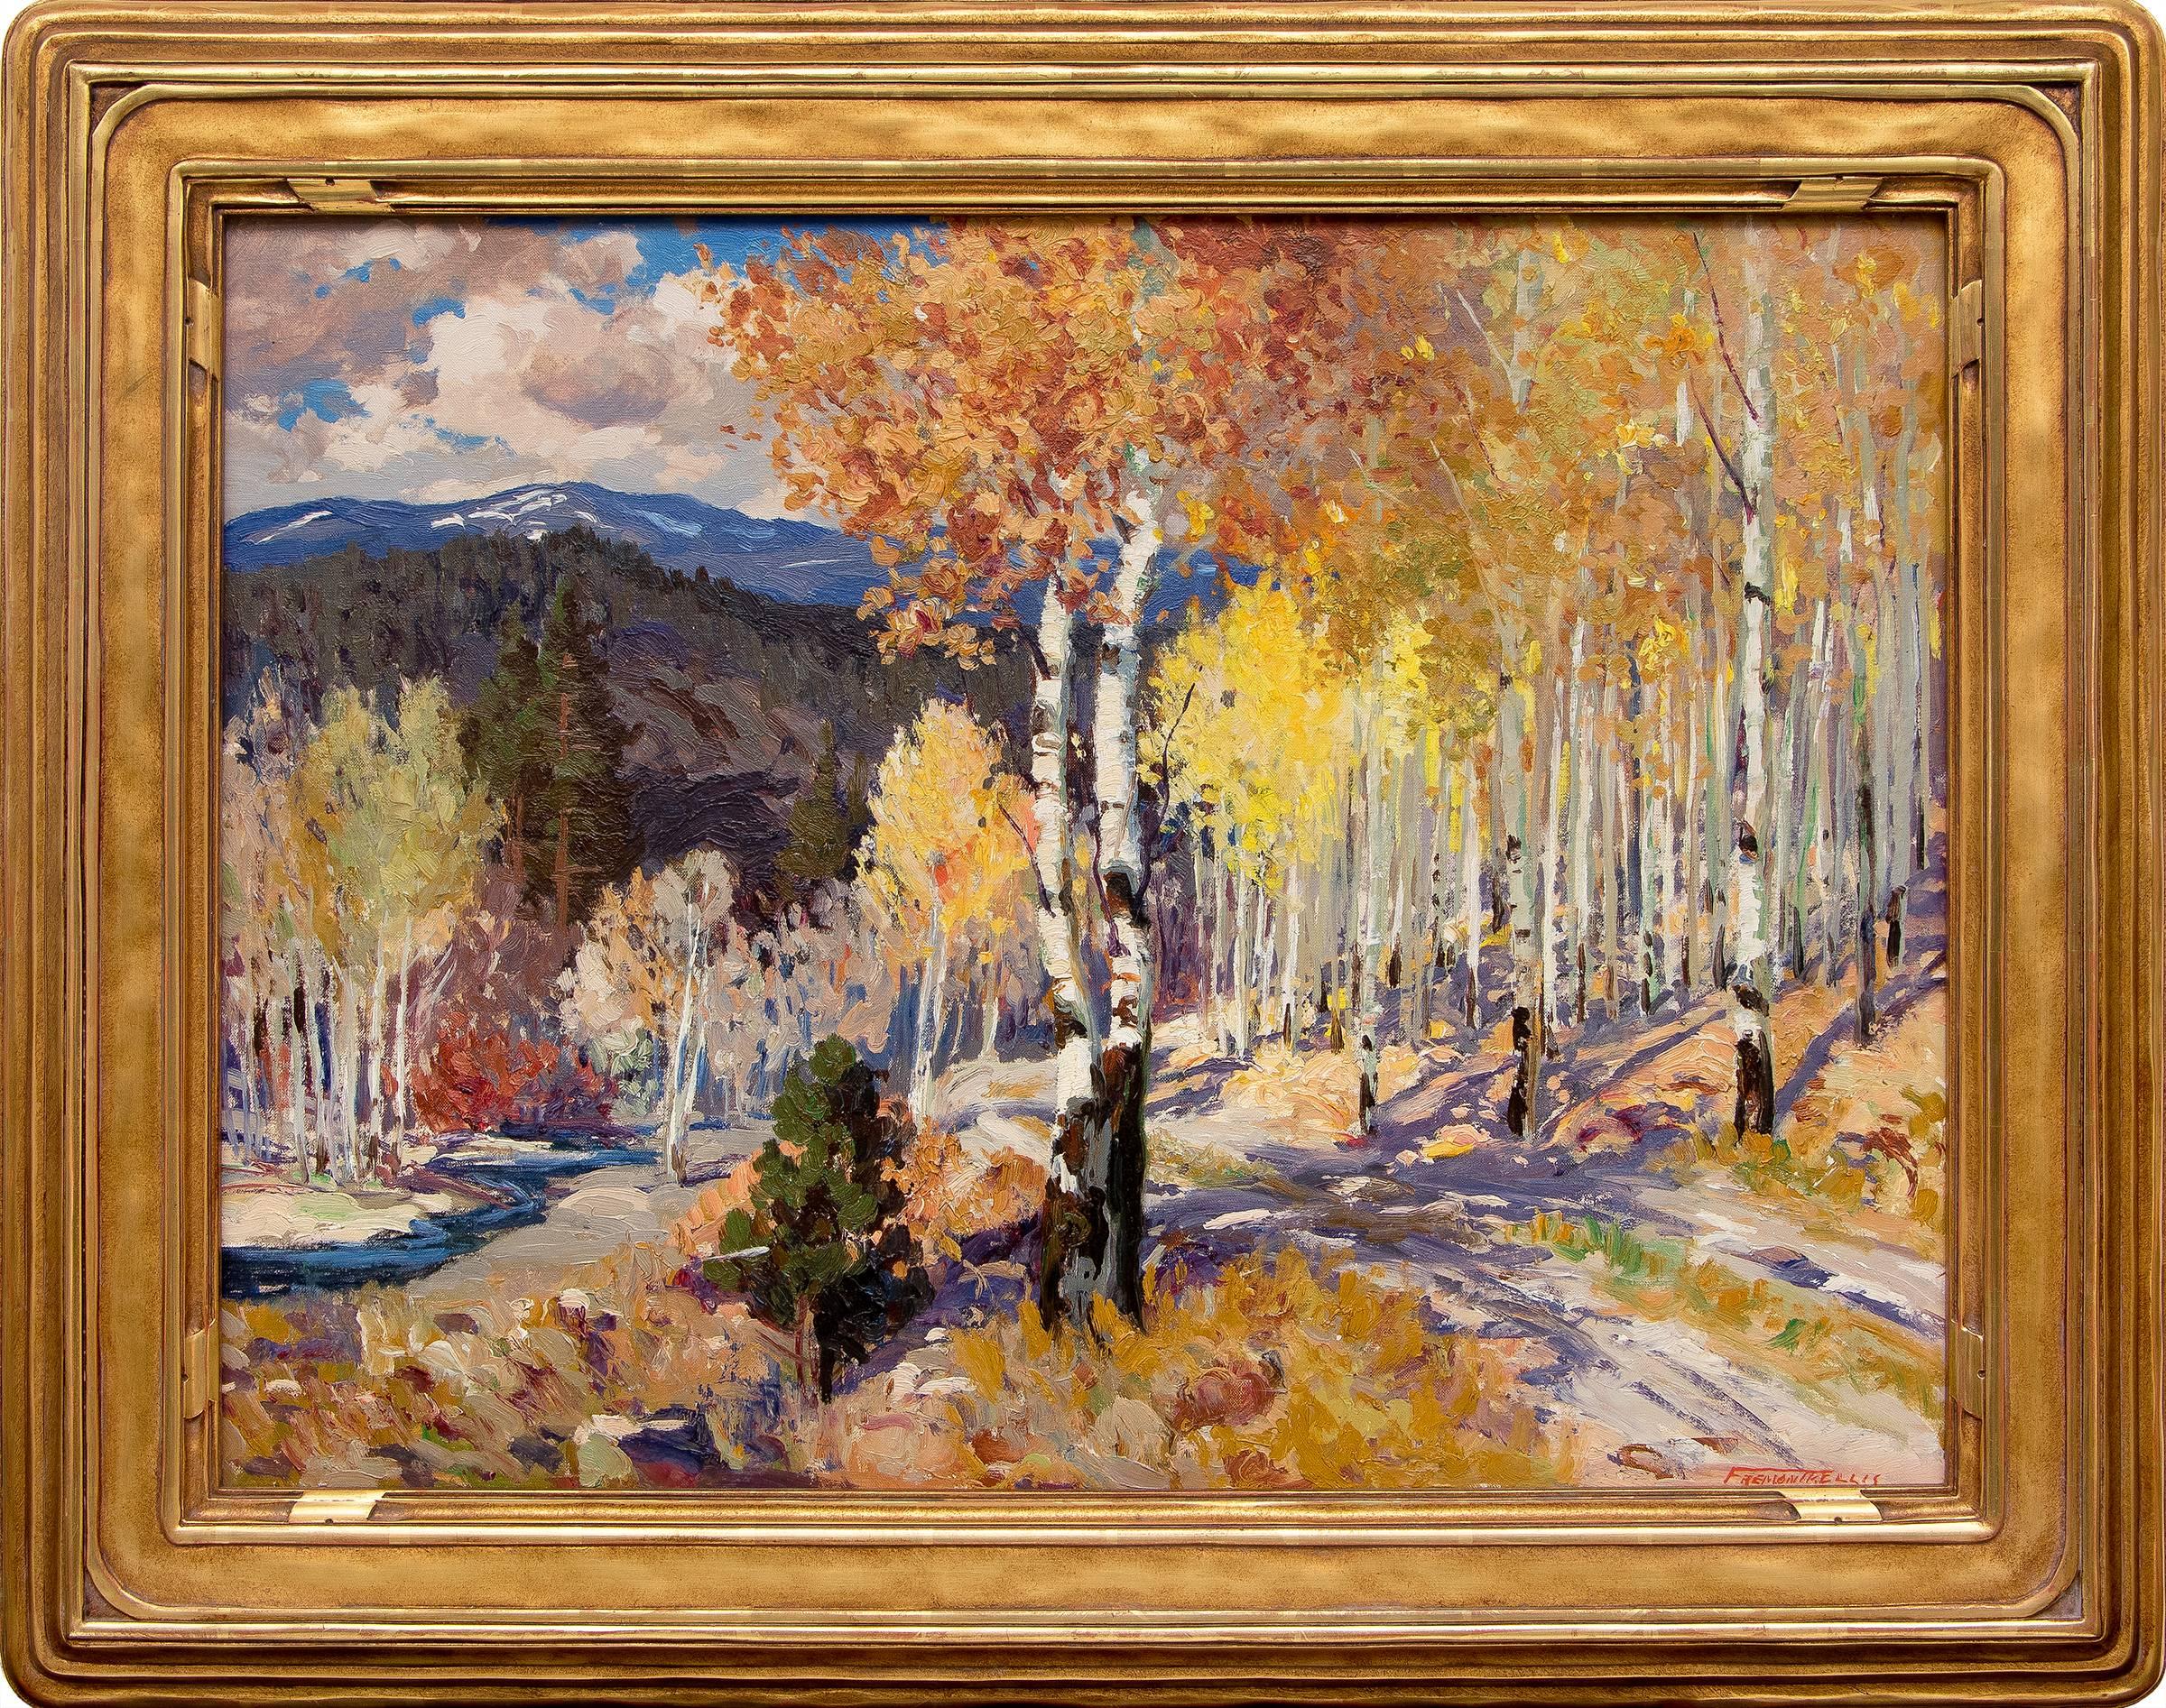 Autumn Aspen - Santa Fe Canyon (New Mexico) - Painting by Fremont Ellis